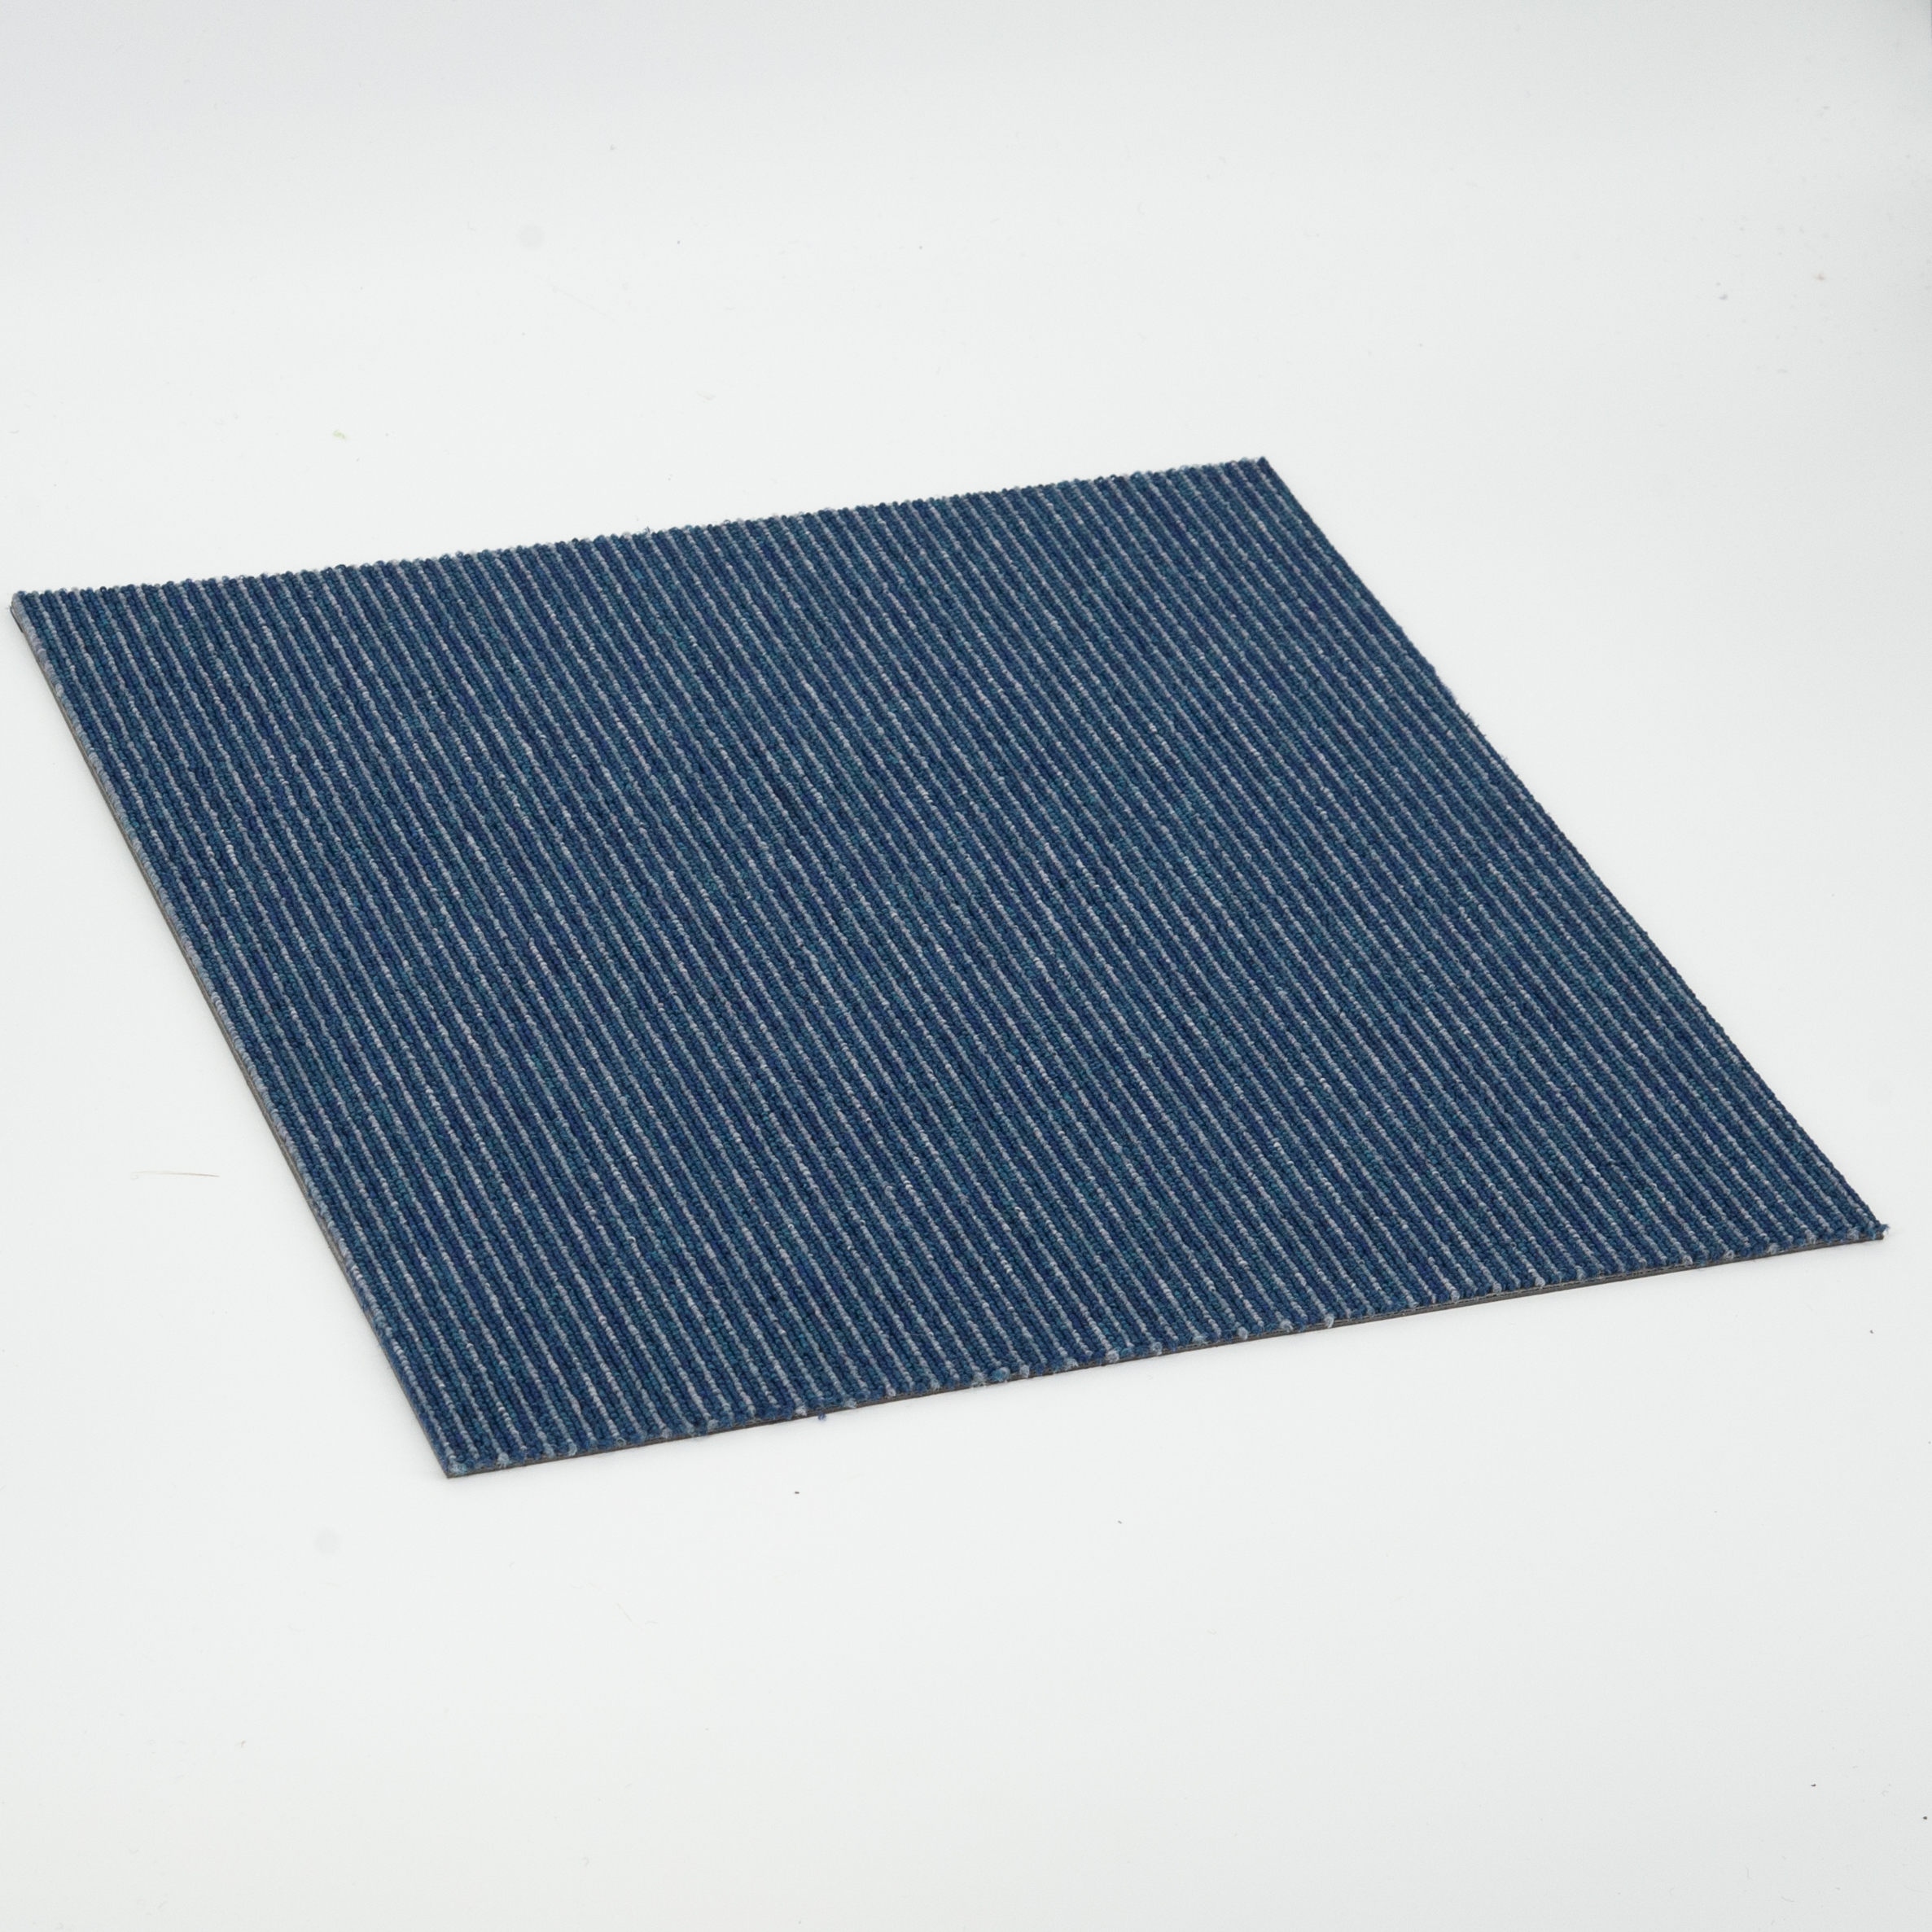 Thick Self Adhesive Soft Carpet Tiles